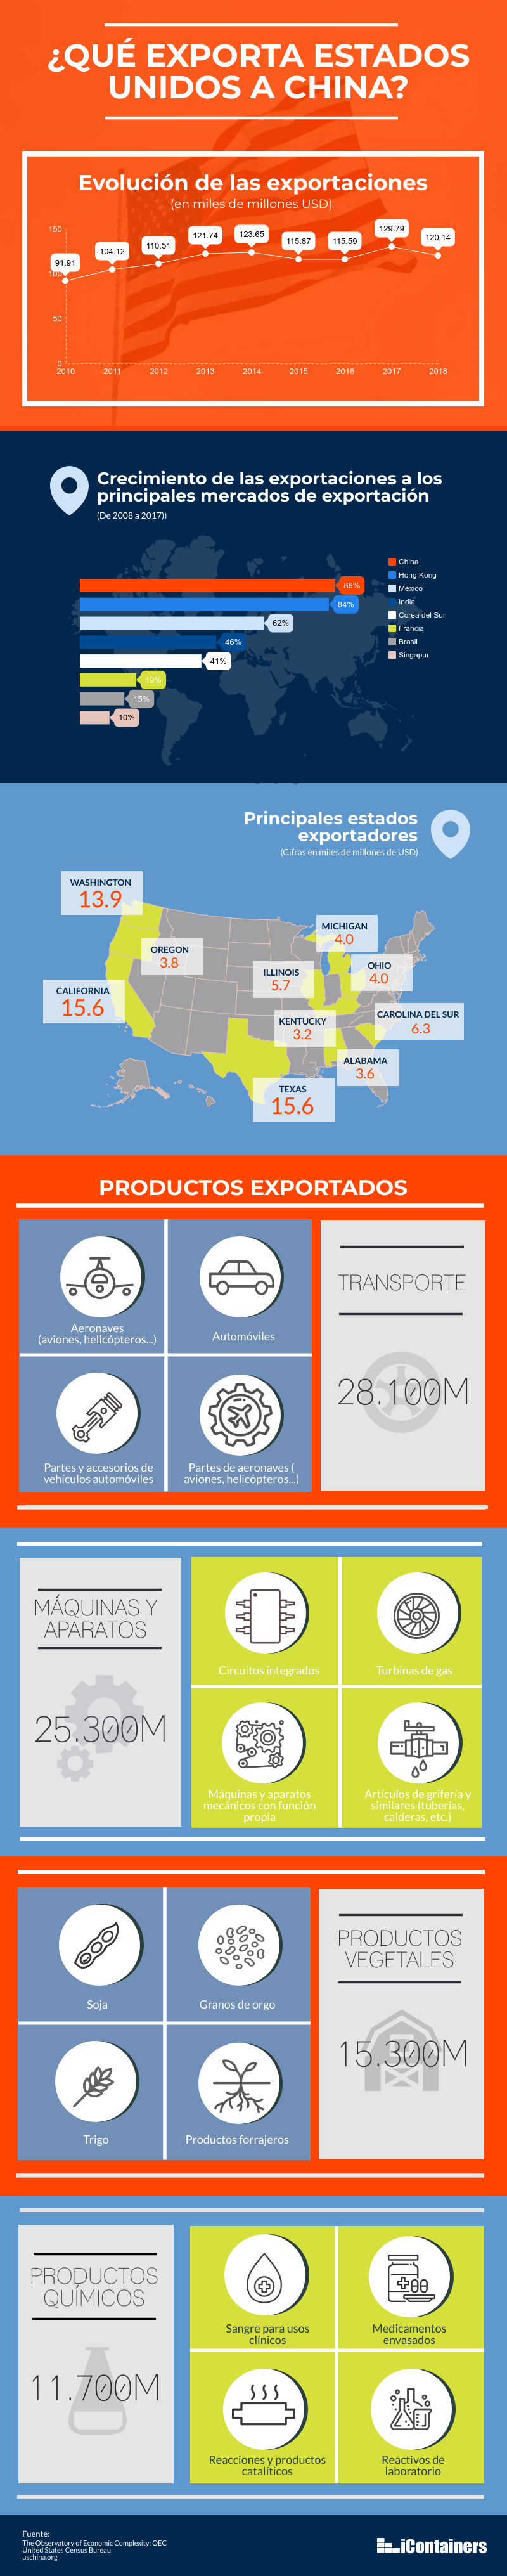 Qué exporta Estados Unidos a China infografía